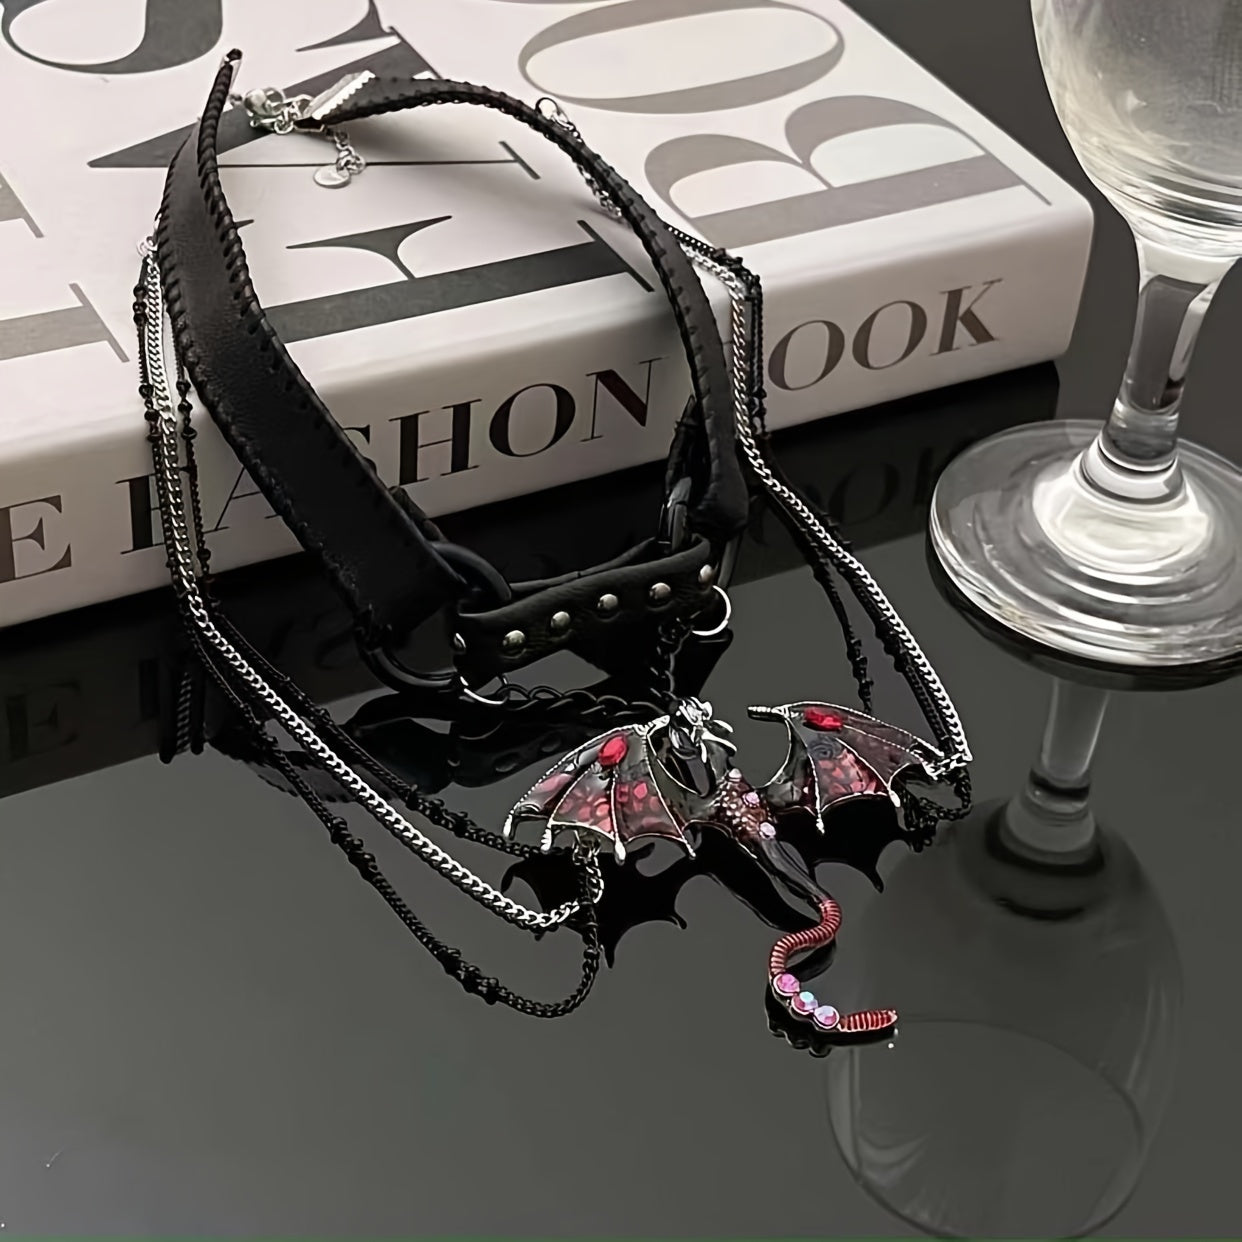 Dragon Fantasy Chain Choker | Black PU Leather Punk Collar